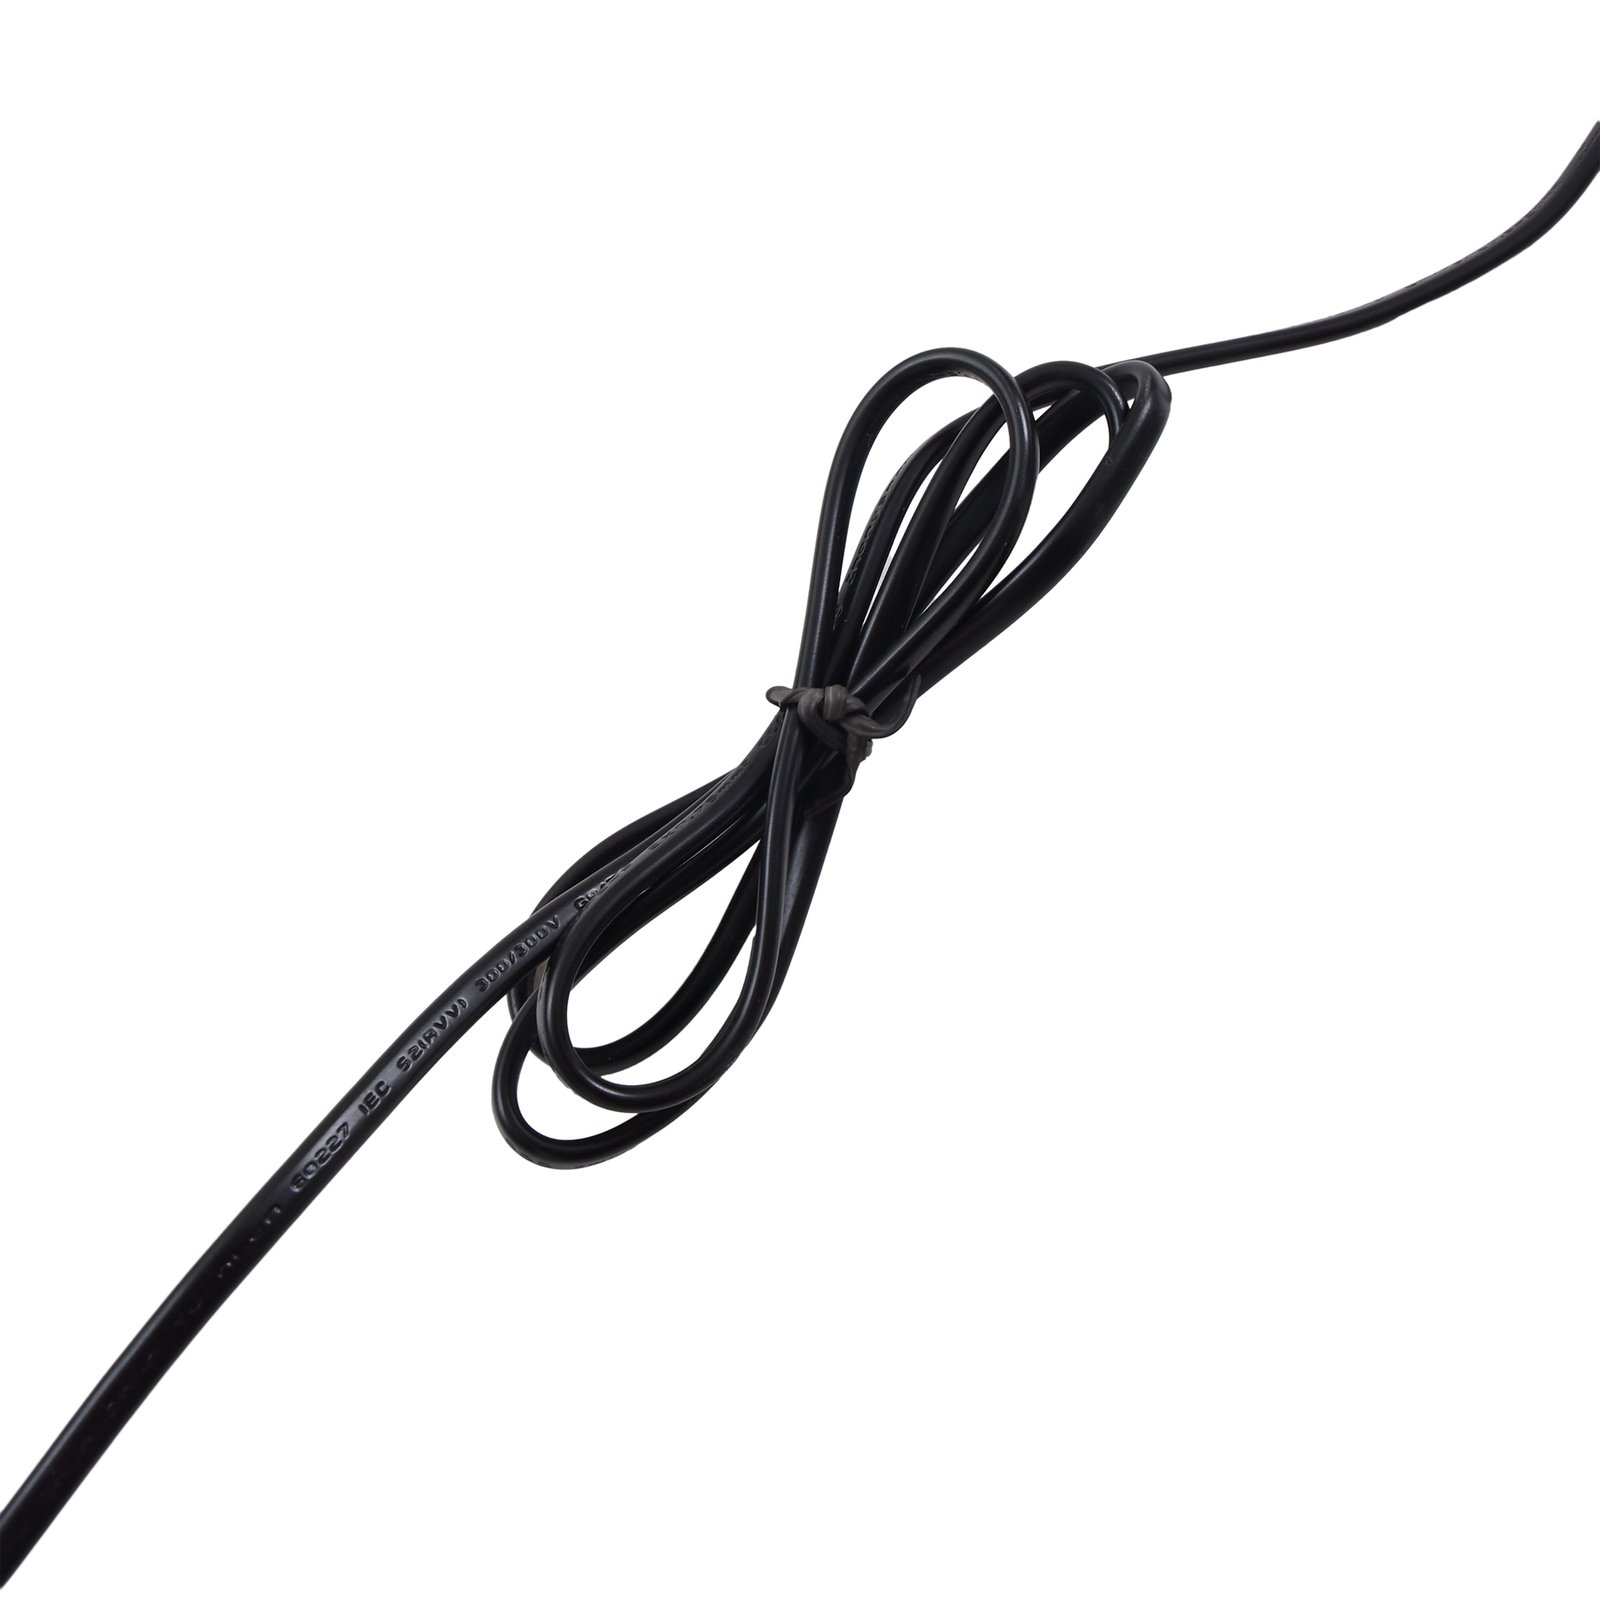 Lucande Silka gulvlampe, høyde 173 cm, justerbar, svart